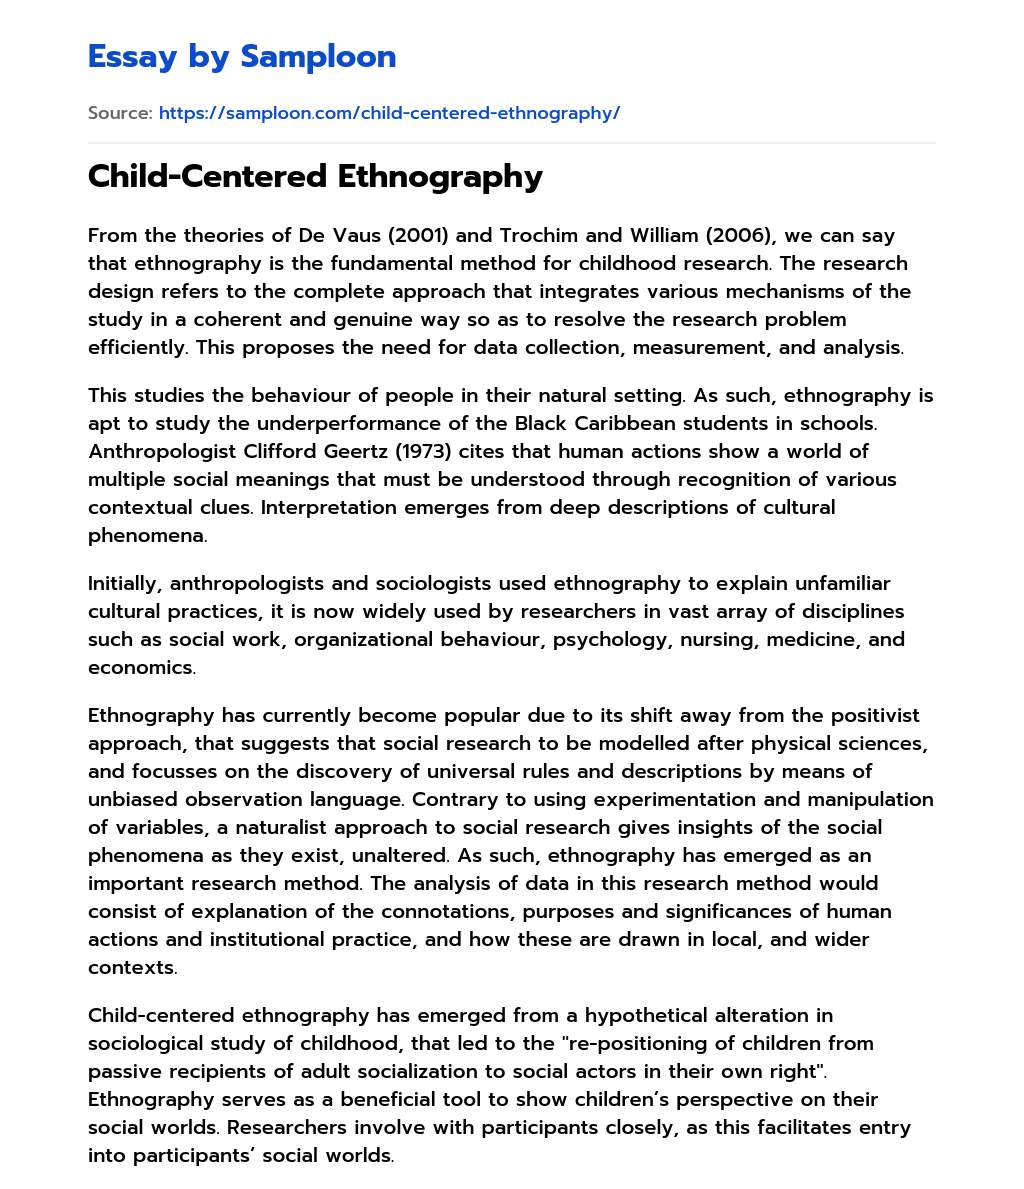 Child-Centered Ethnography essay